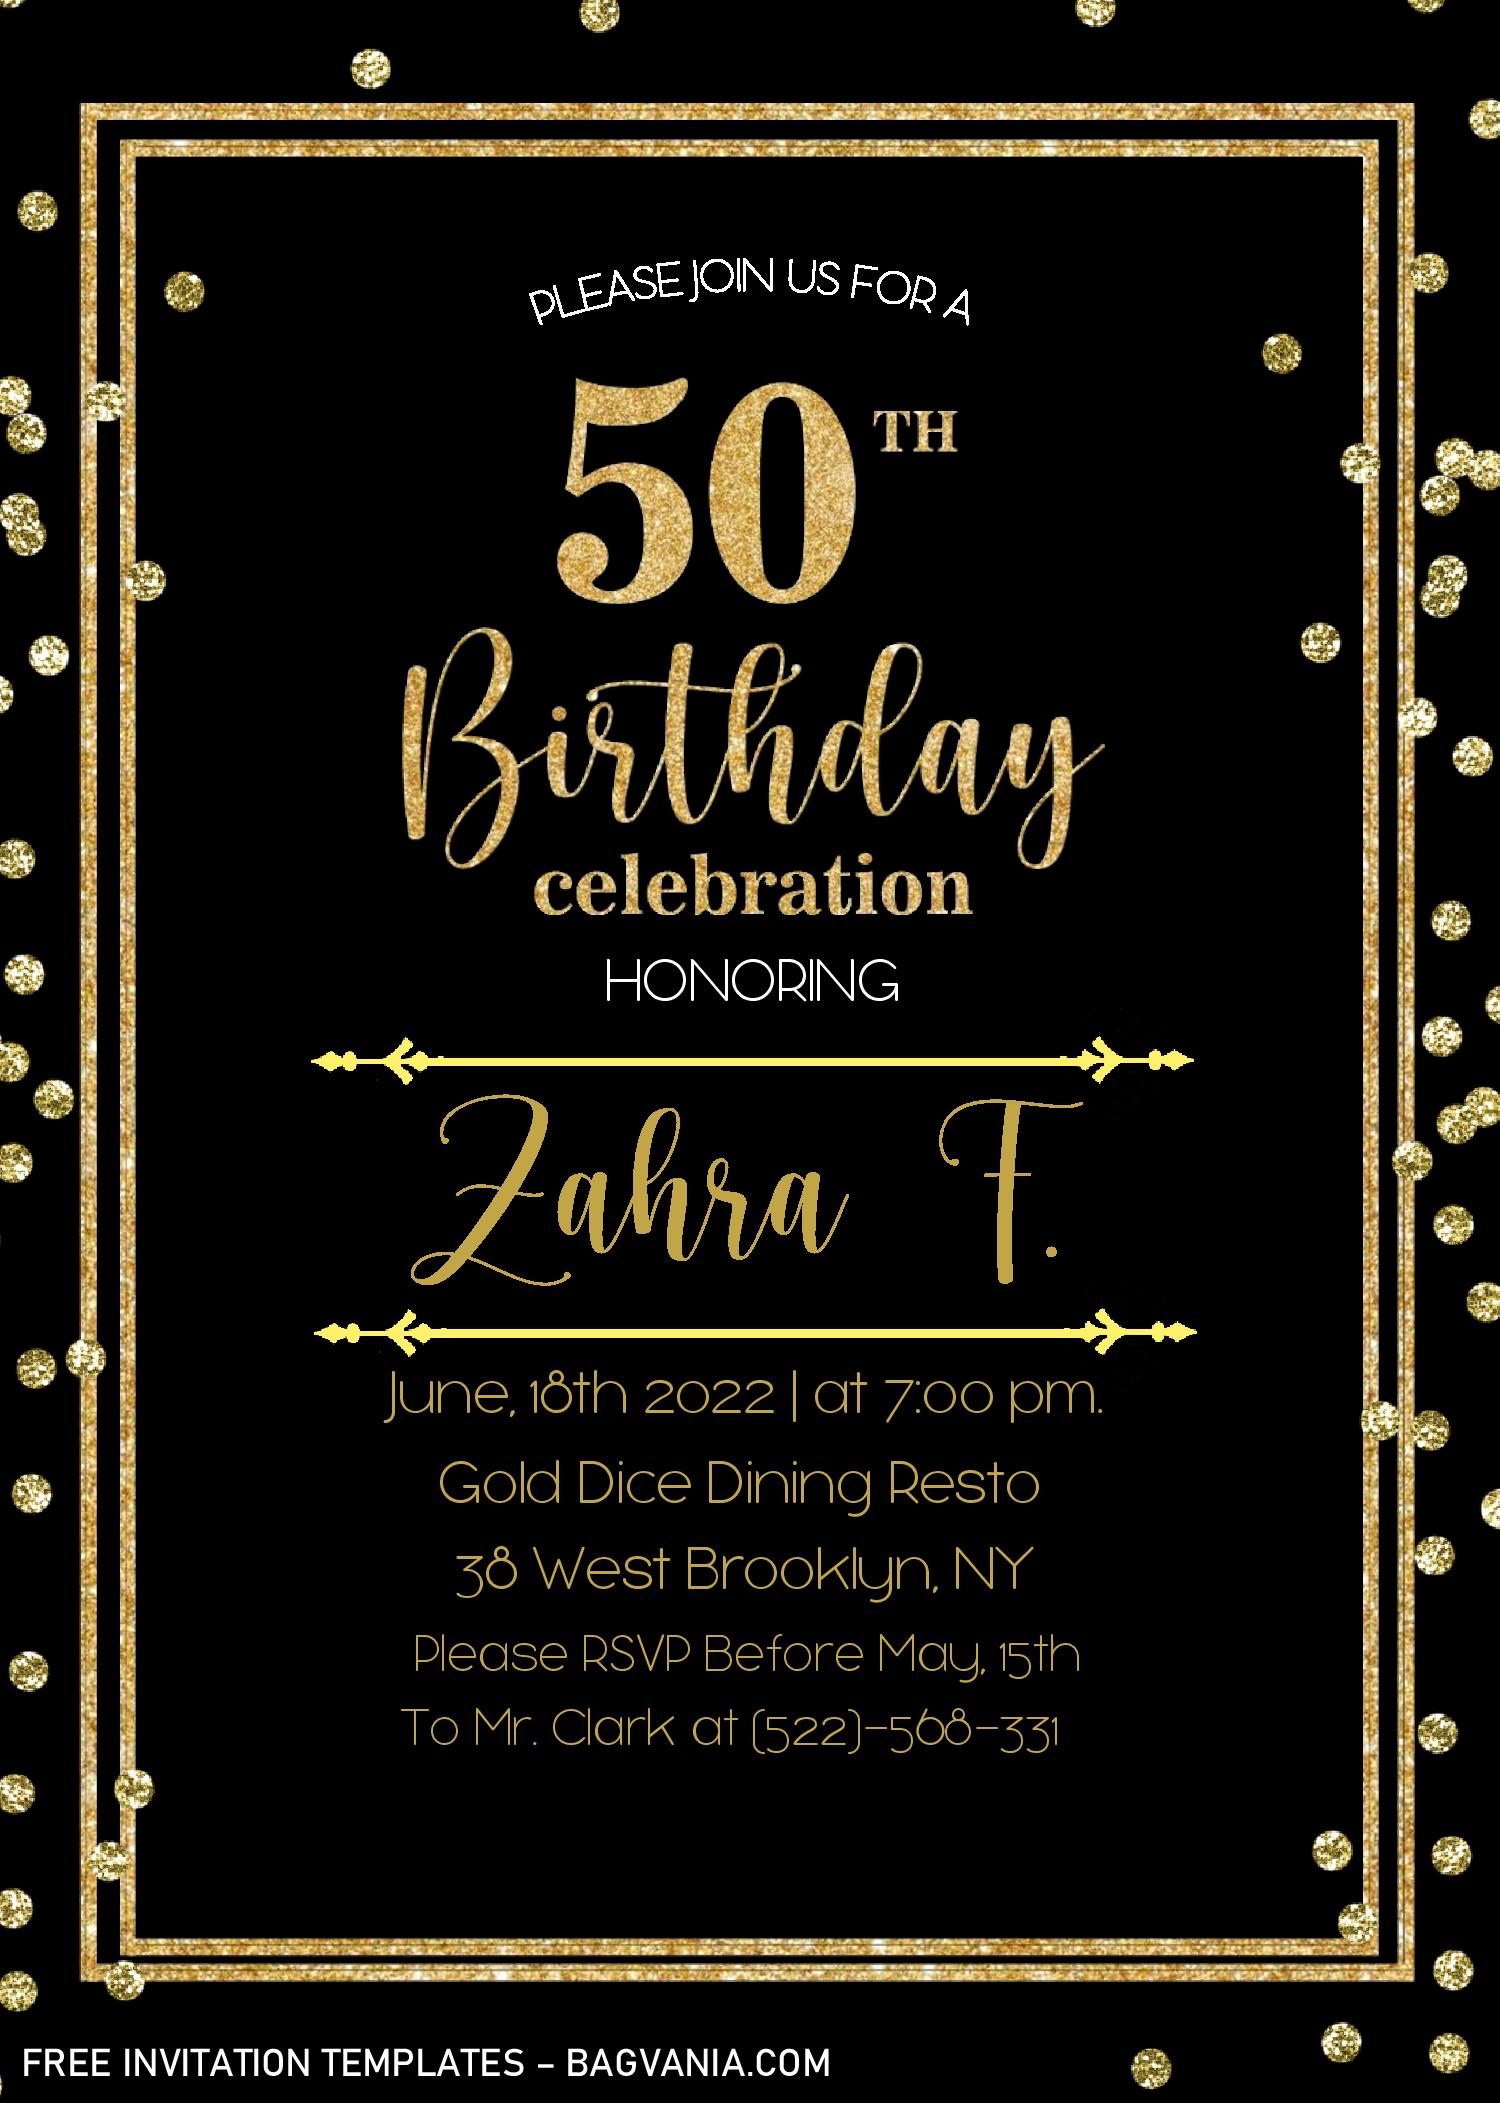 50th-birthday-invitation-template